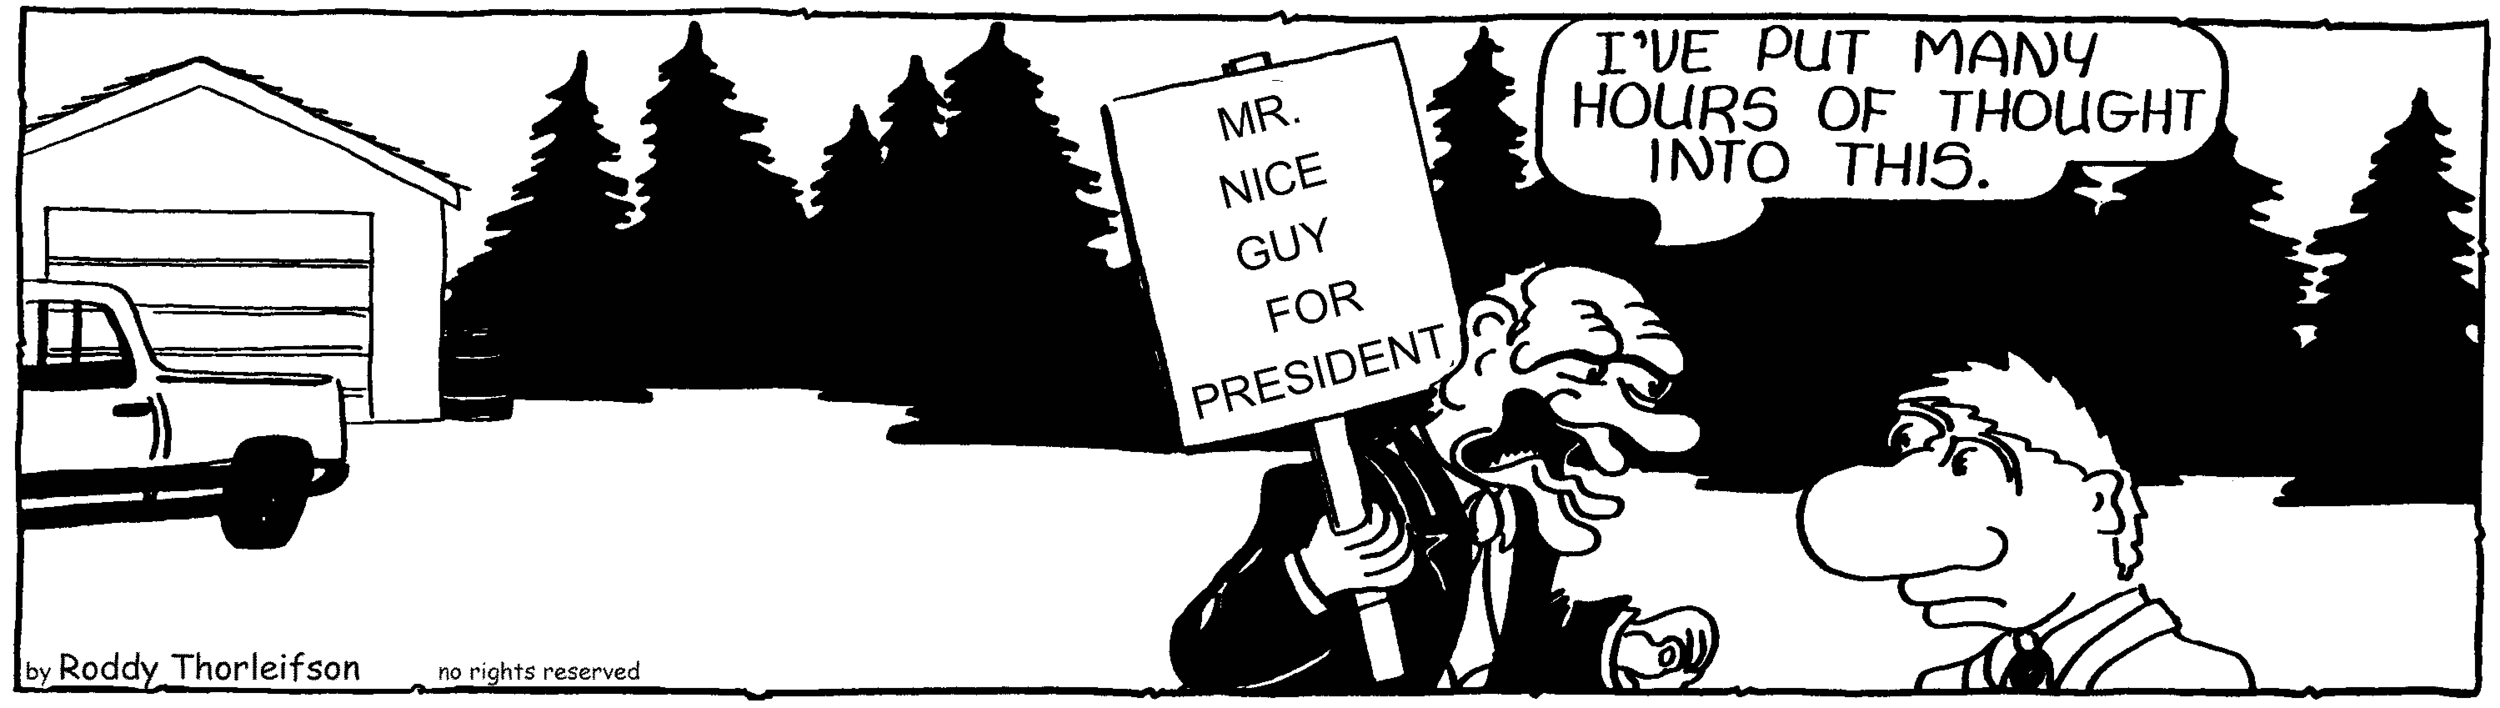 free cartoon politics politicians political Mr. Nice Guy